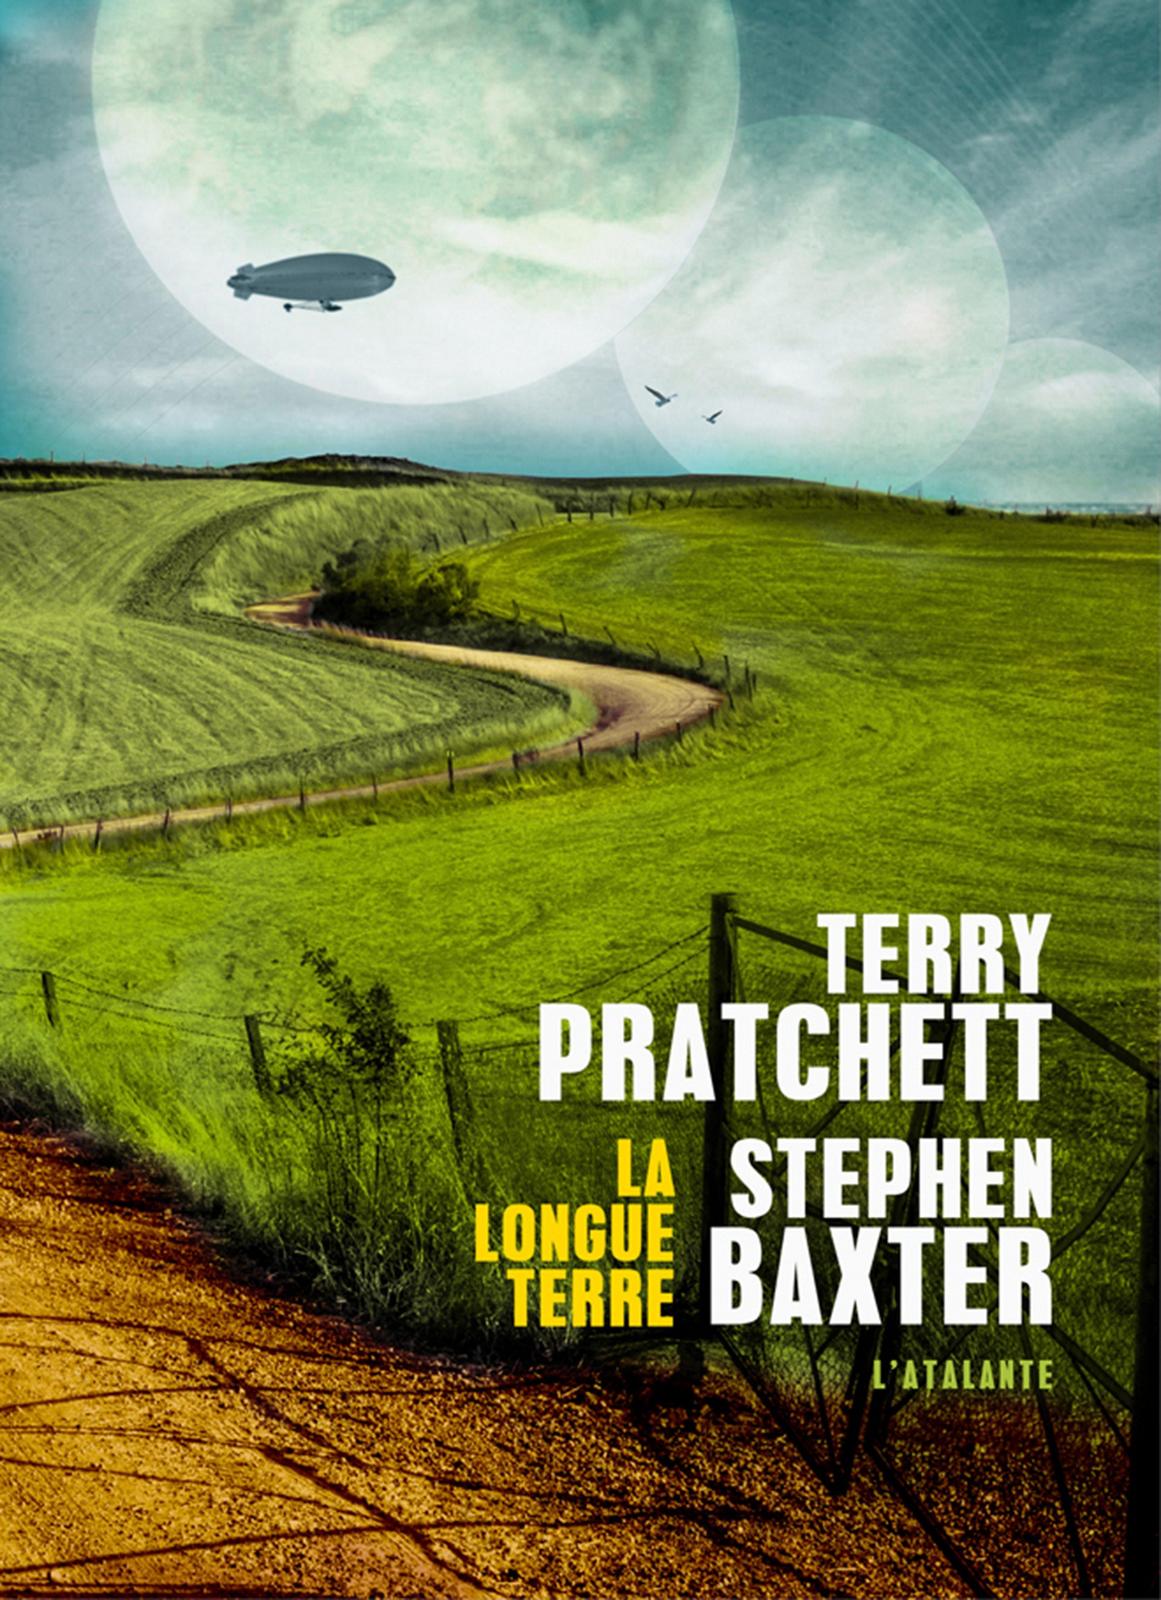 Stephen Baxter, Terry Pratchett: La longue terre (French language, 2013)